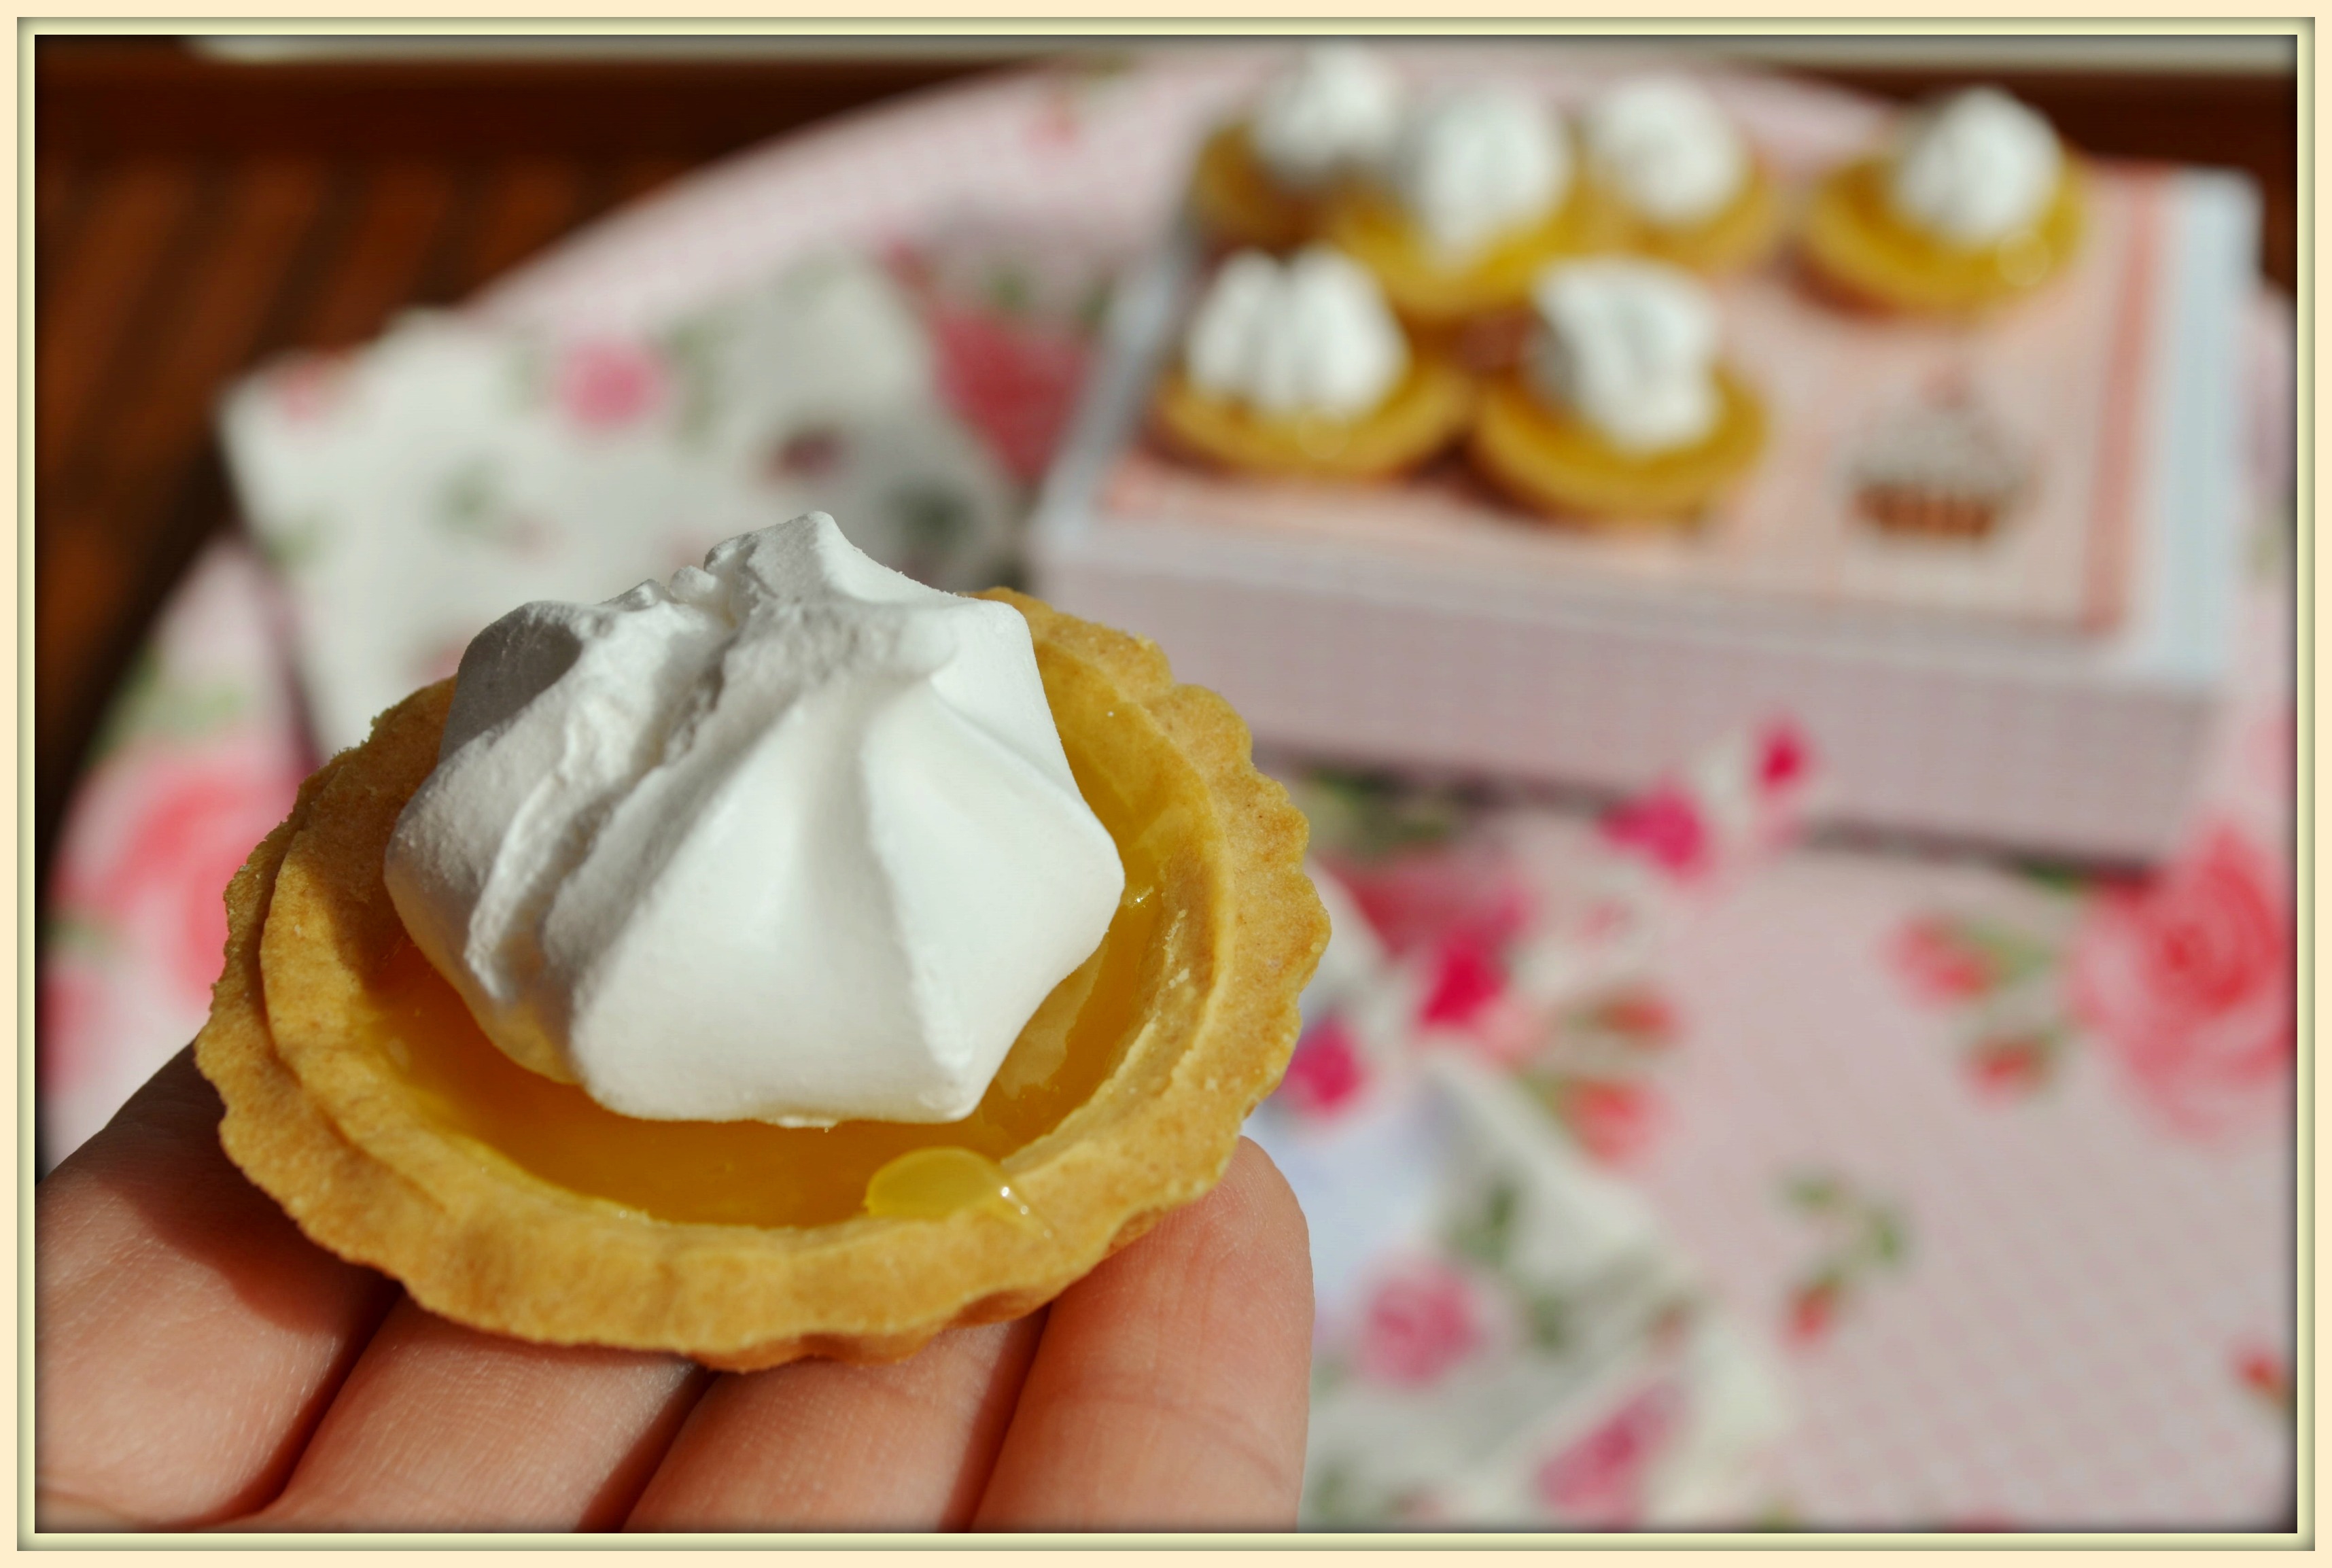 Mini tarts with lemon curd and ambrosia pudding!